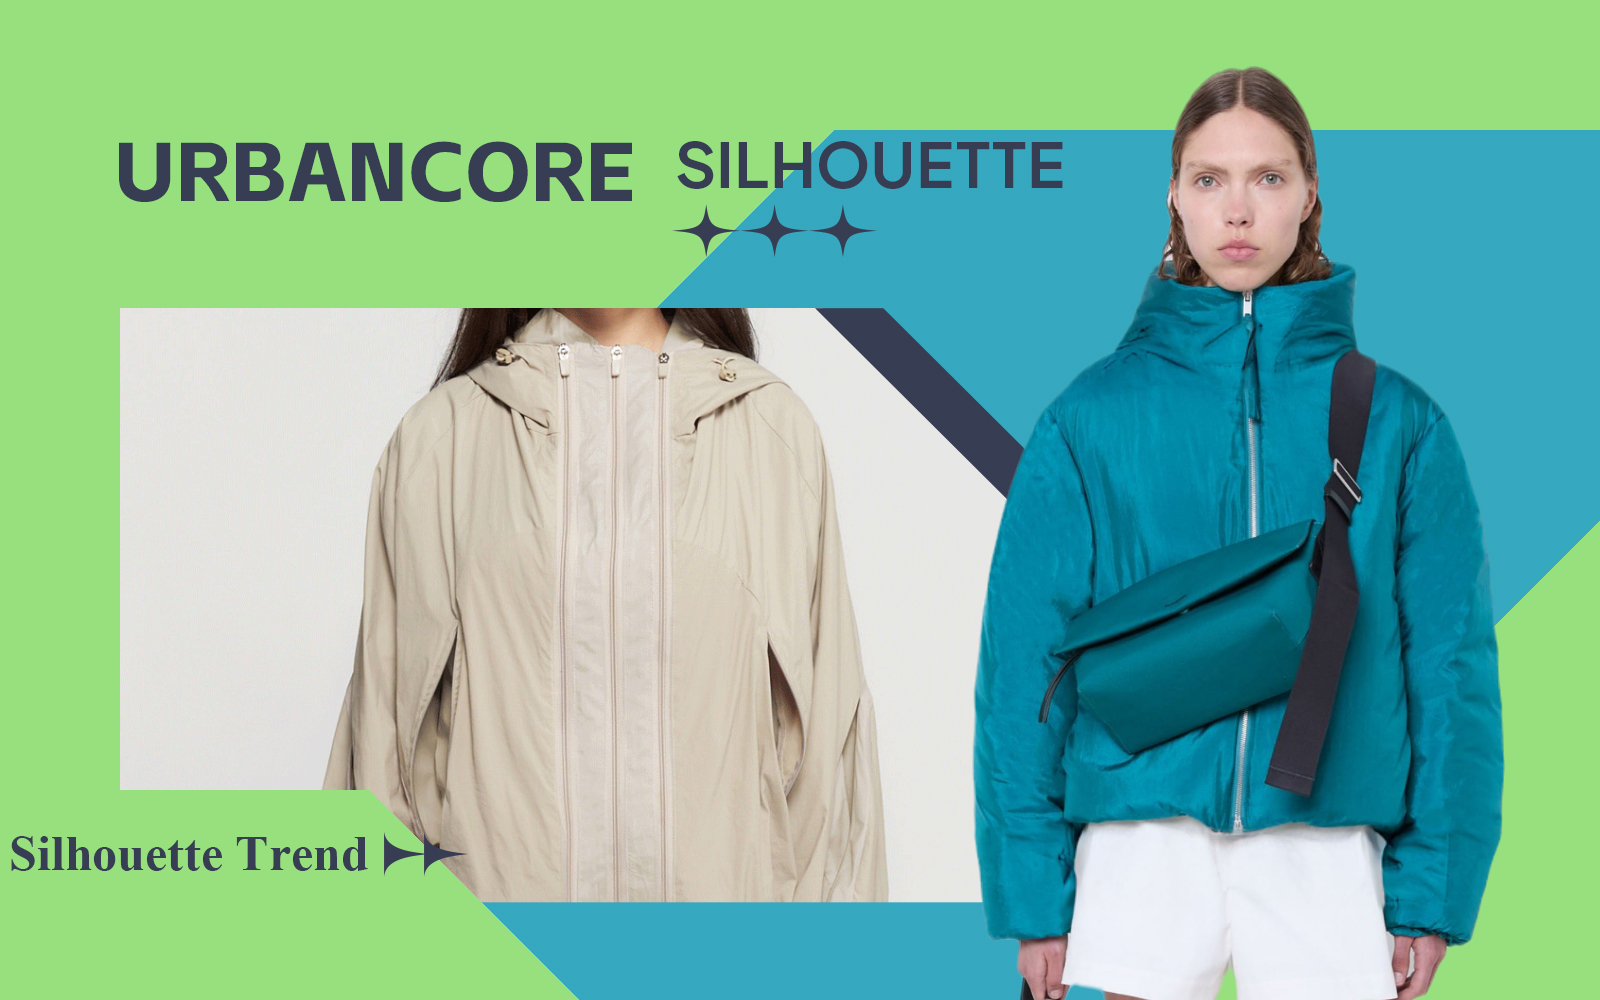 Urbancore -- The Silhouette Trend for Womenswear